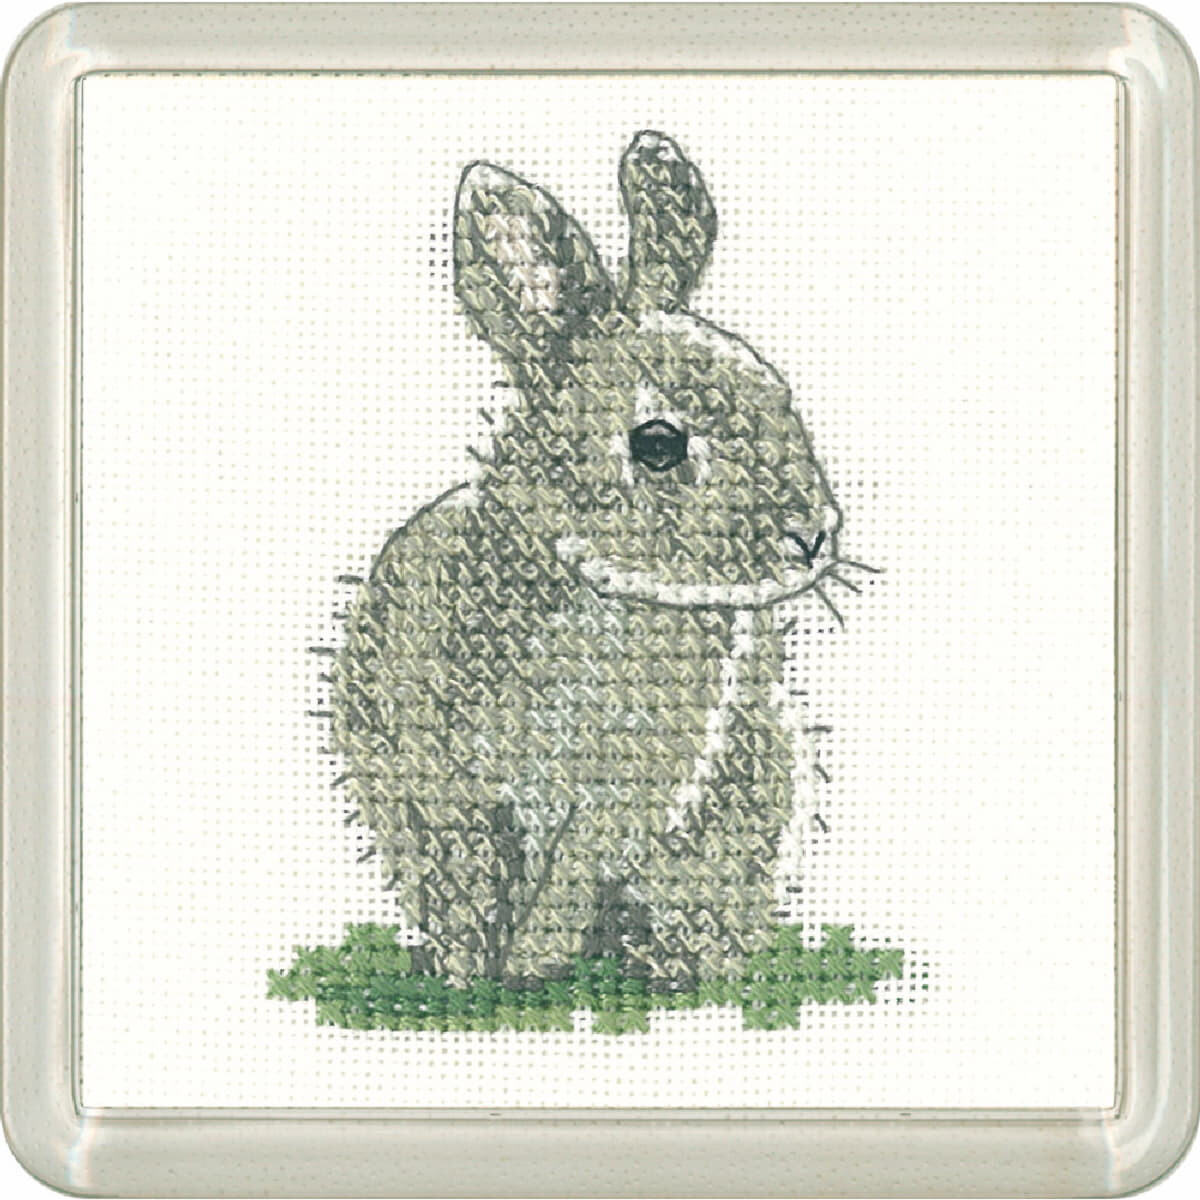 Heritage counted cross stitch kit Aida "Baby Rabbit...